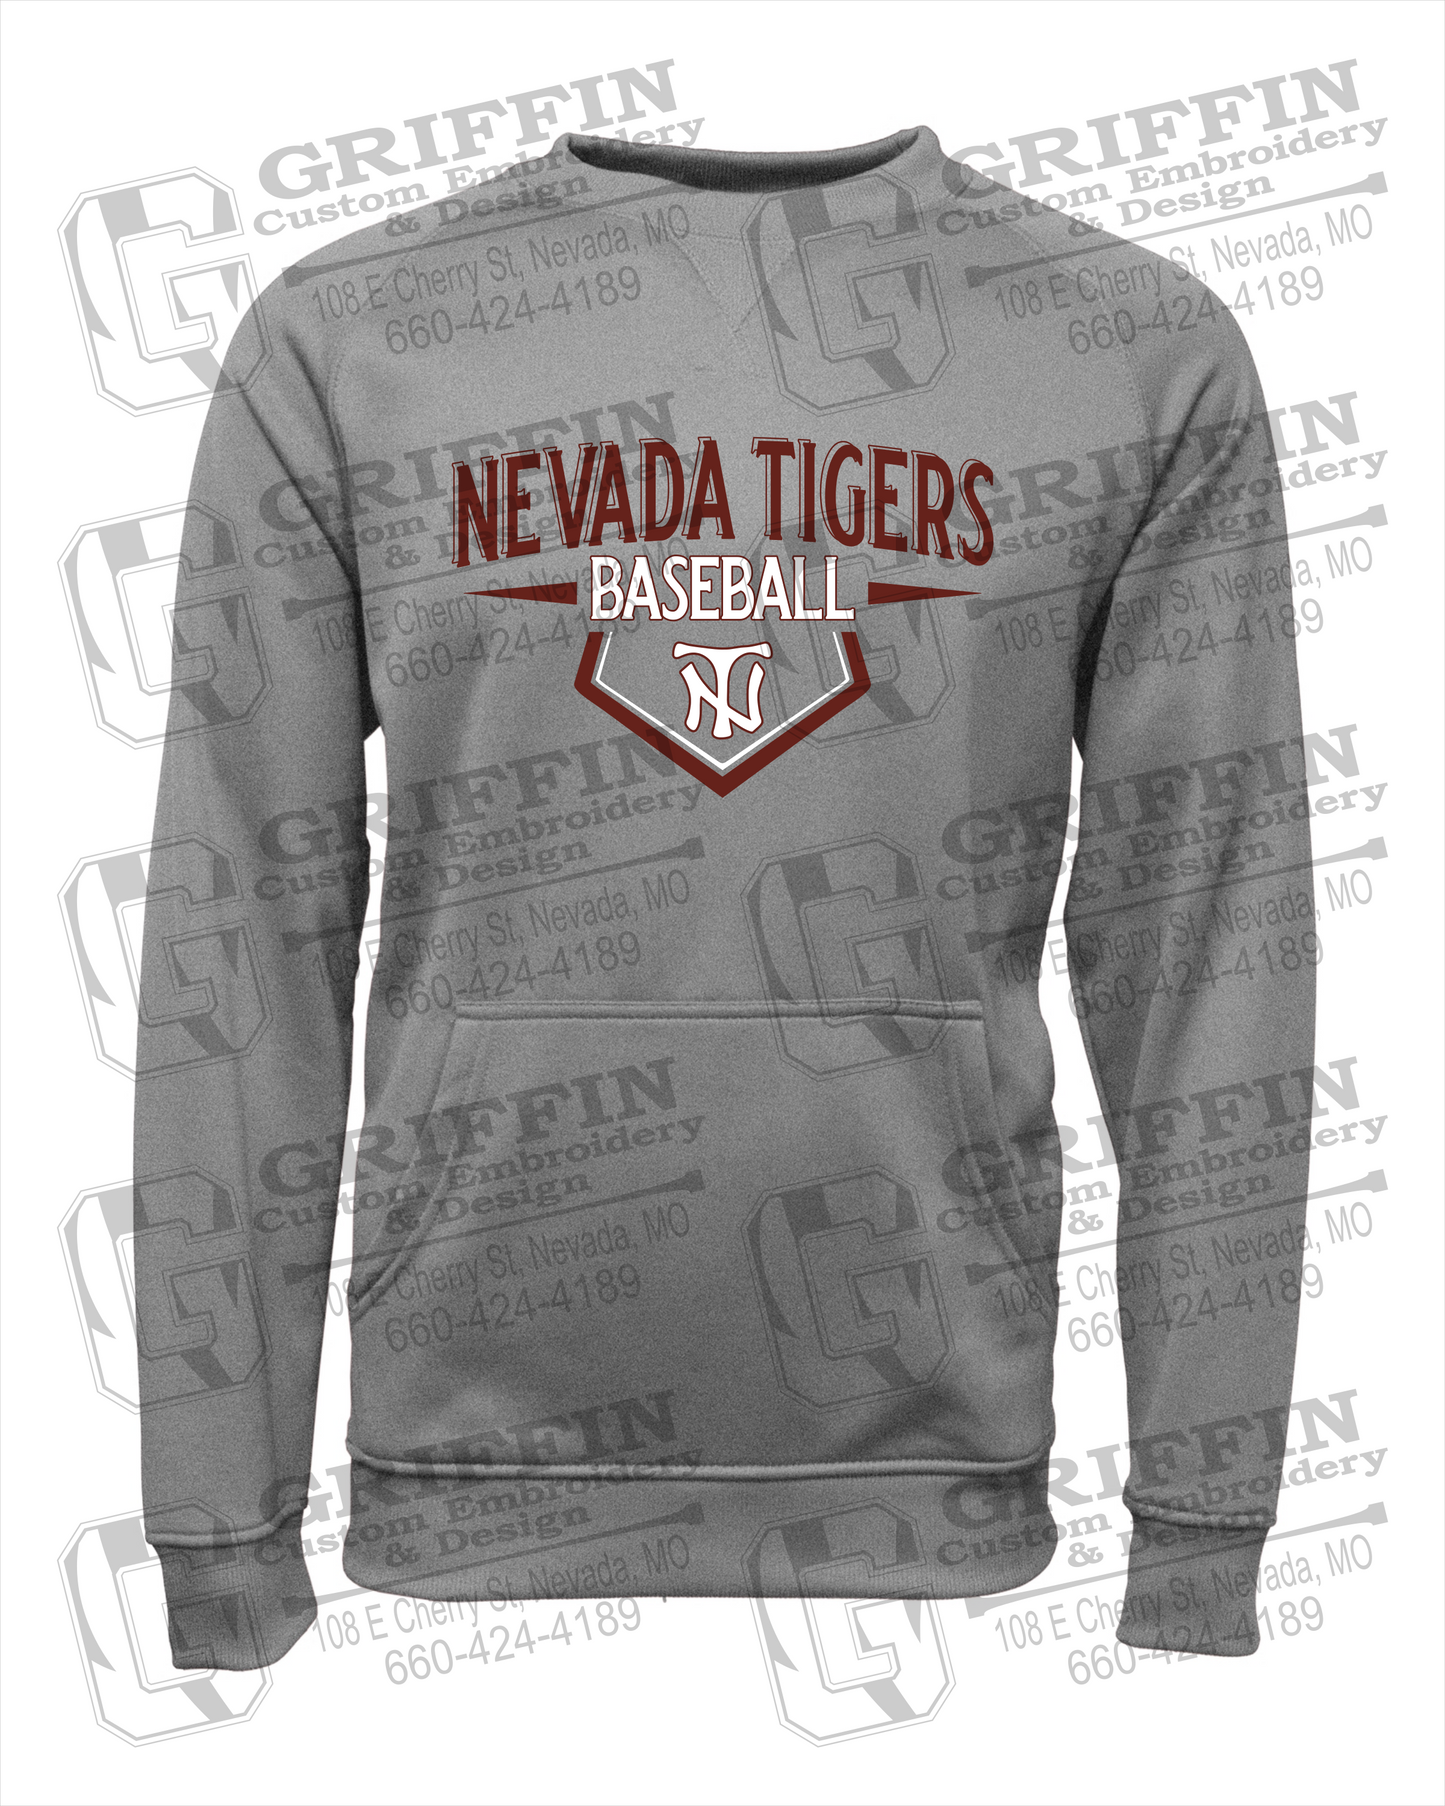 Nevada Tigers 24-W Youth Sweatshirt - Baseball